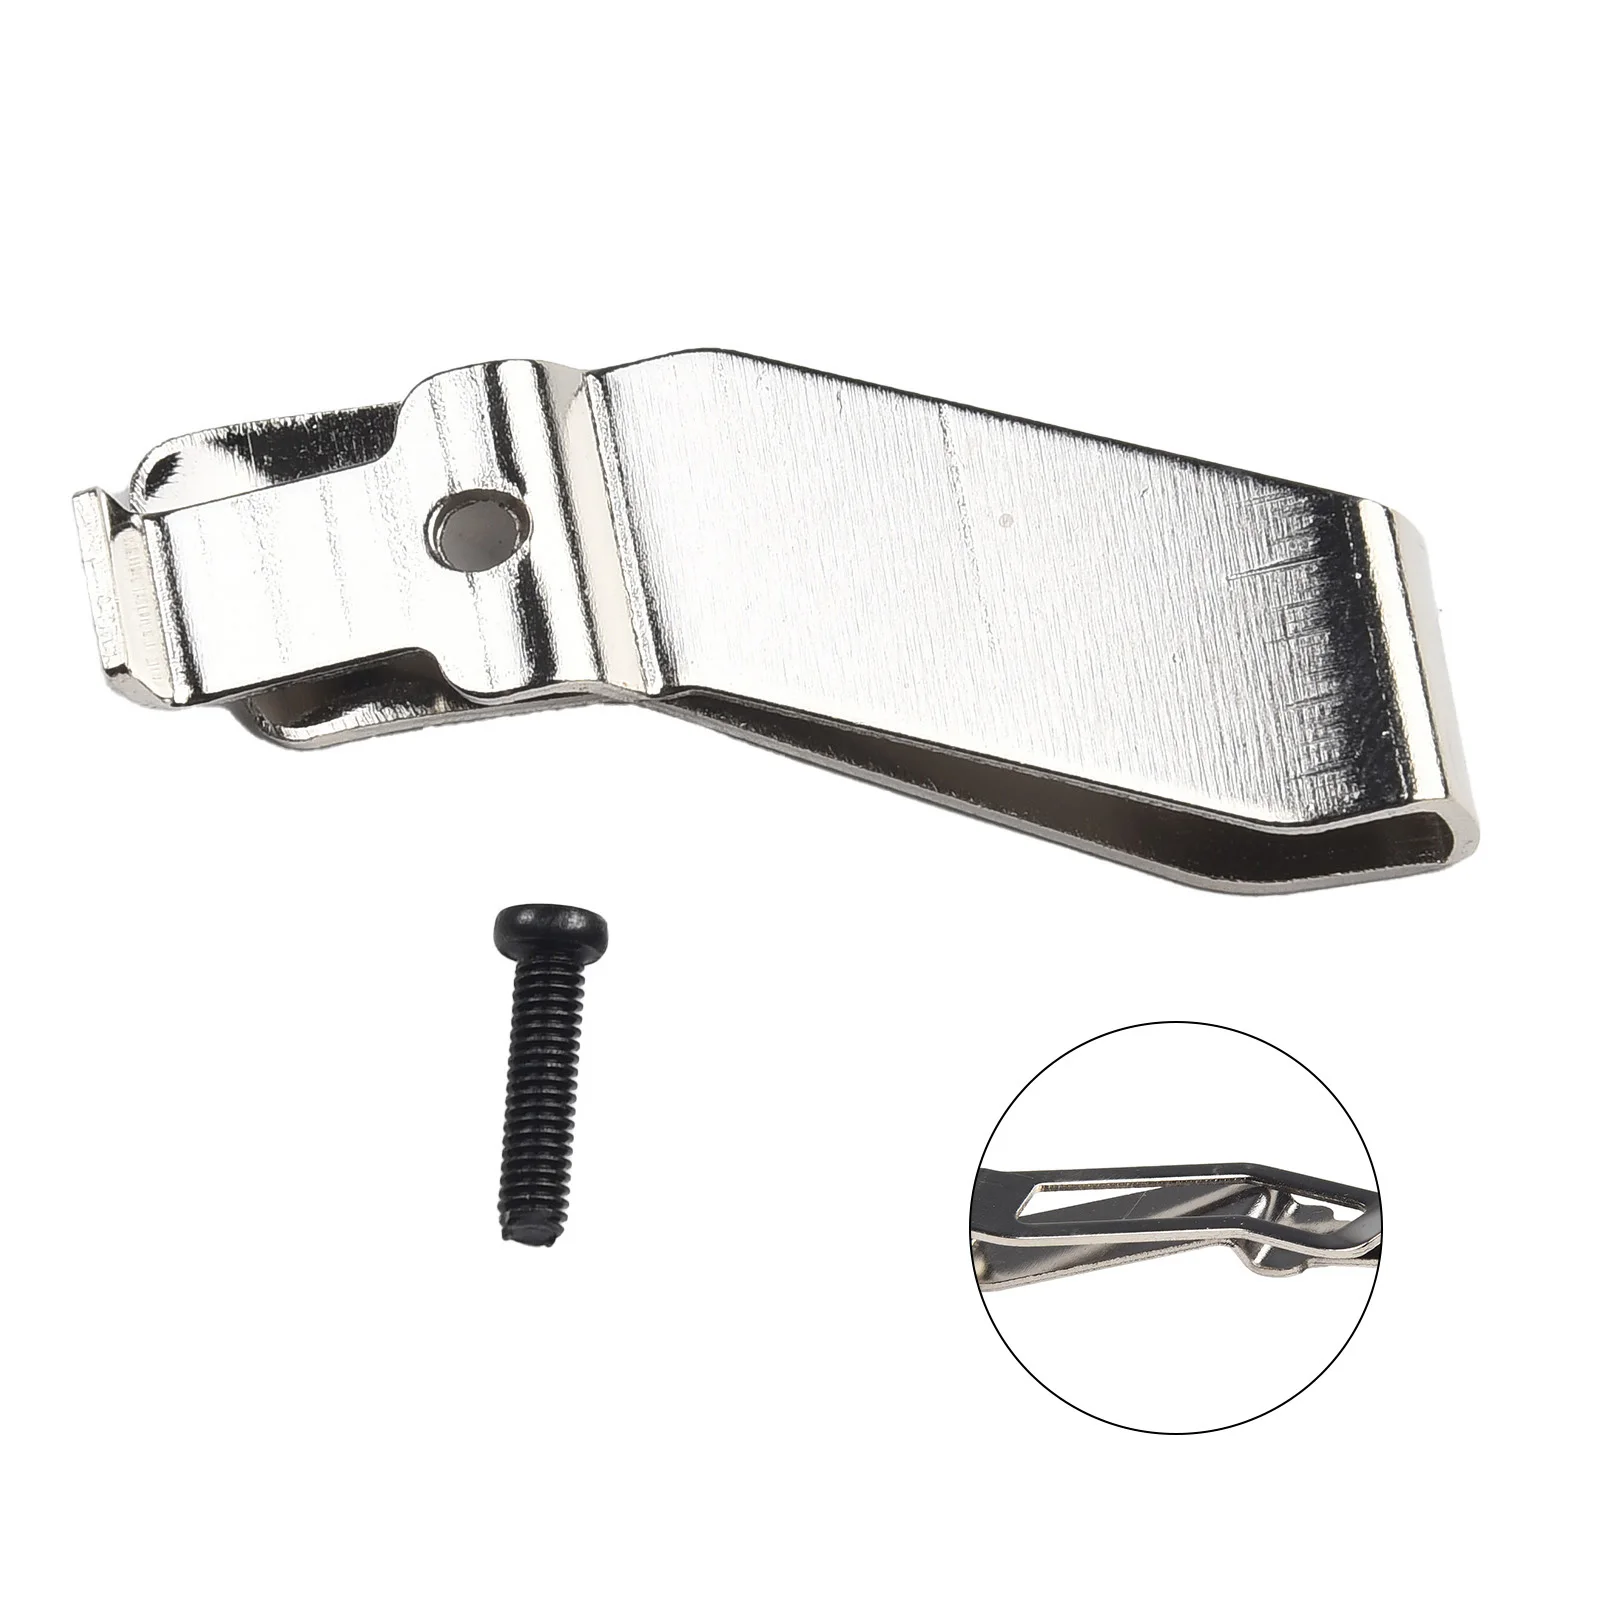 Belt Hook Clip And Screw Part Number 42-70-0117 Belt Clip For 2504-20 Hammer Drill Electric Hammer Power Tool Accessories screw u nut u clip